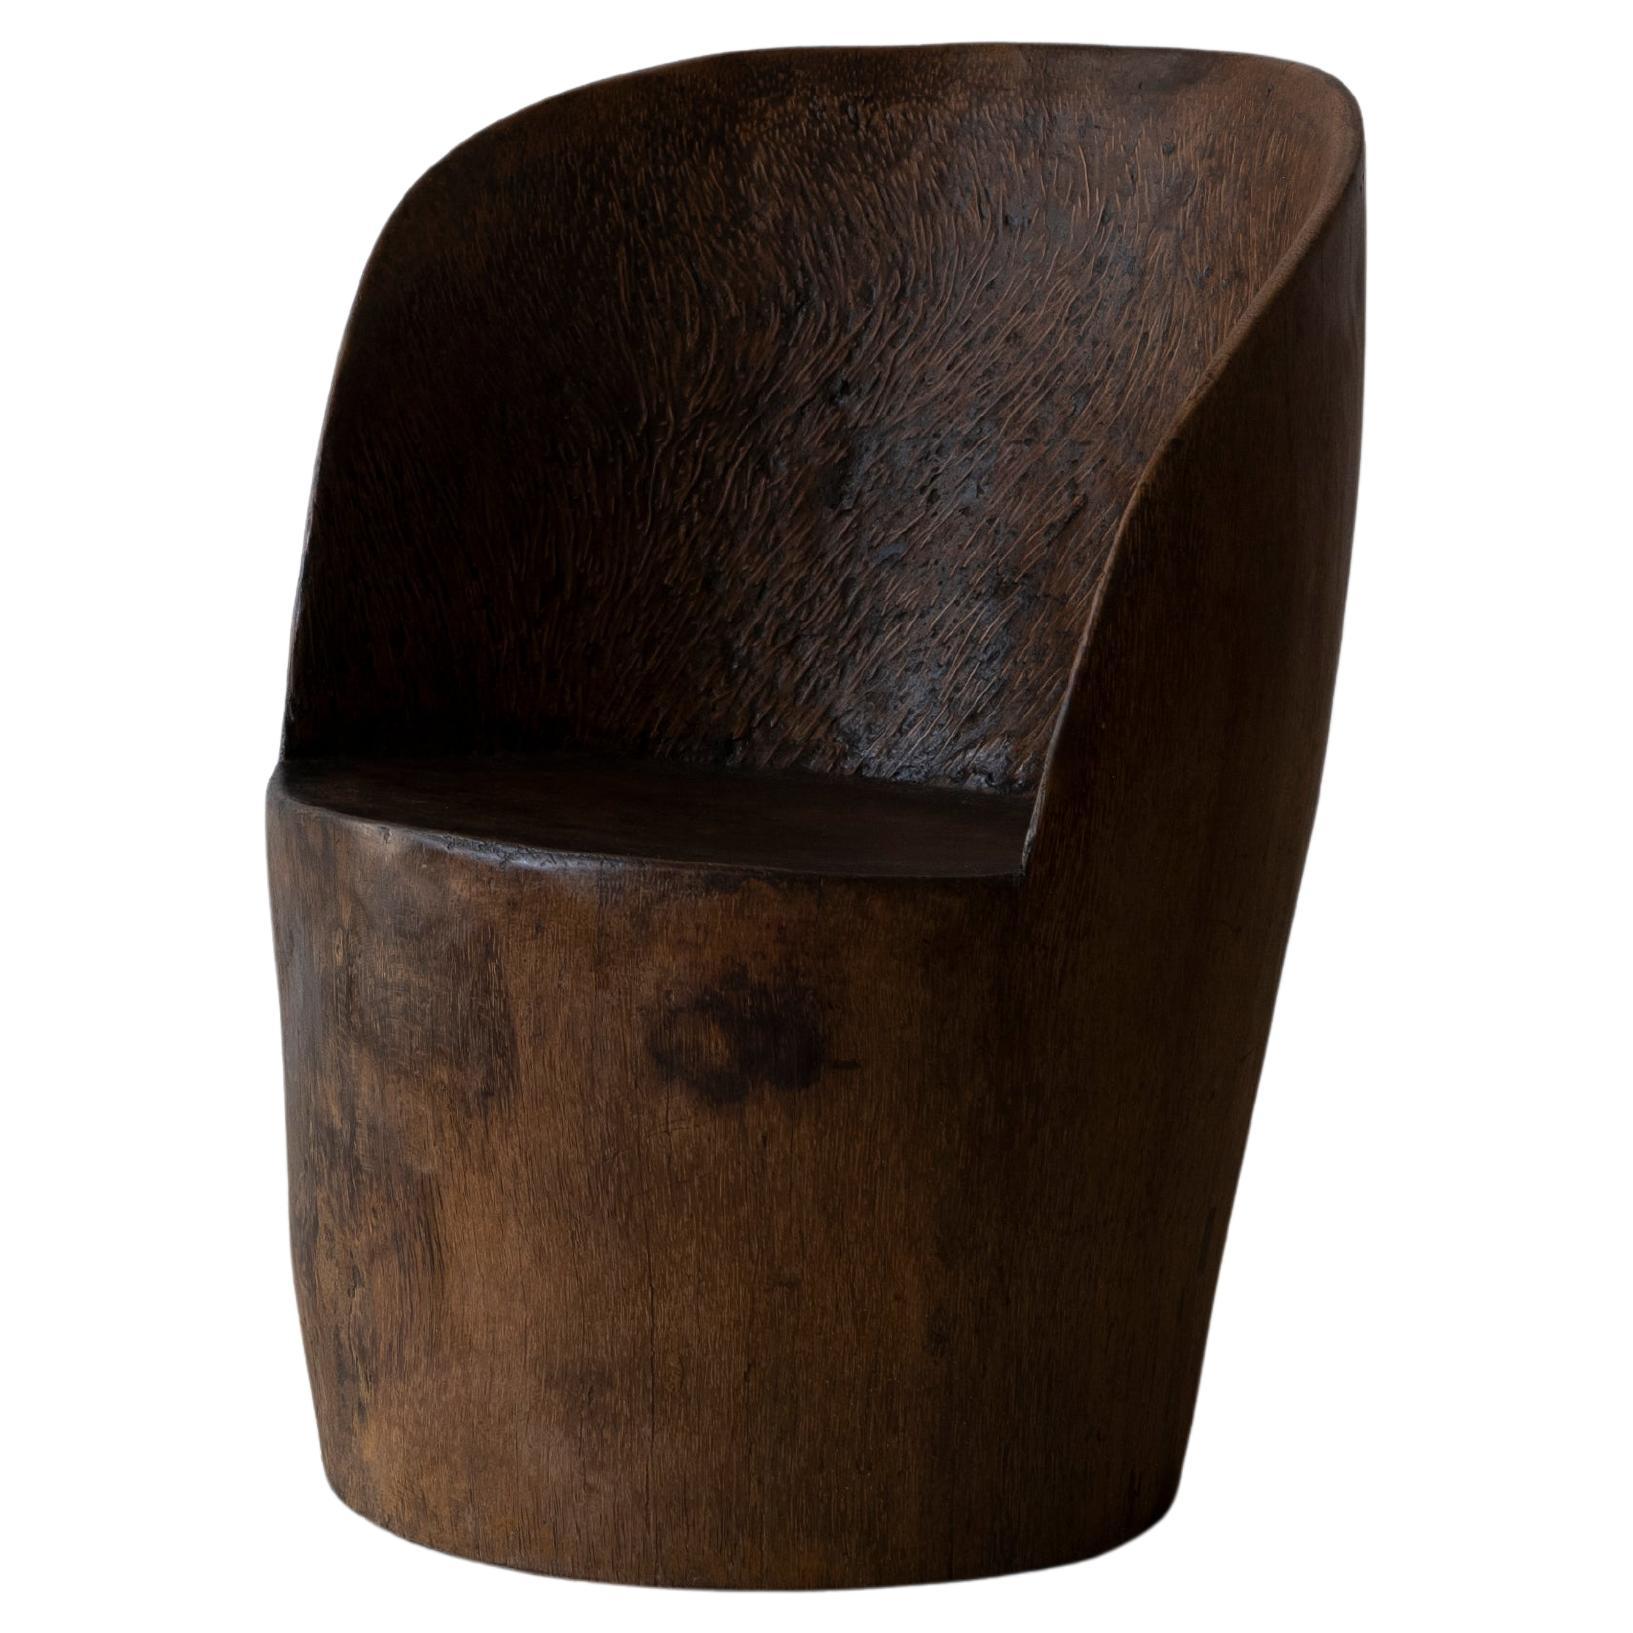 José Zanine Caldas, Banco Pilão, Hand-Sculpted Chair, Signed, Brazil, 1970s For Sale